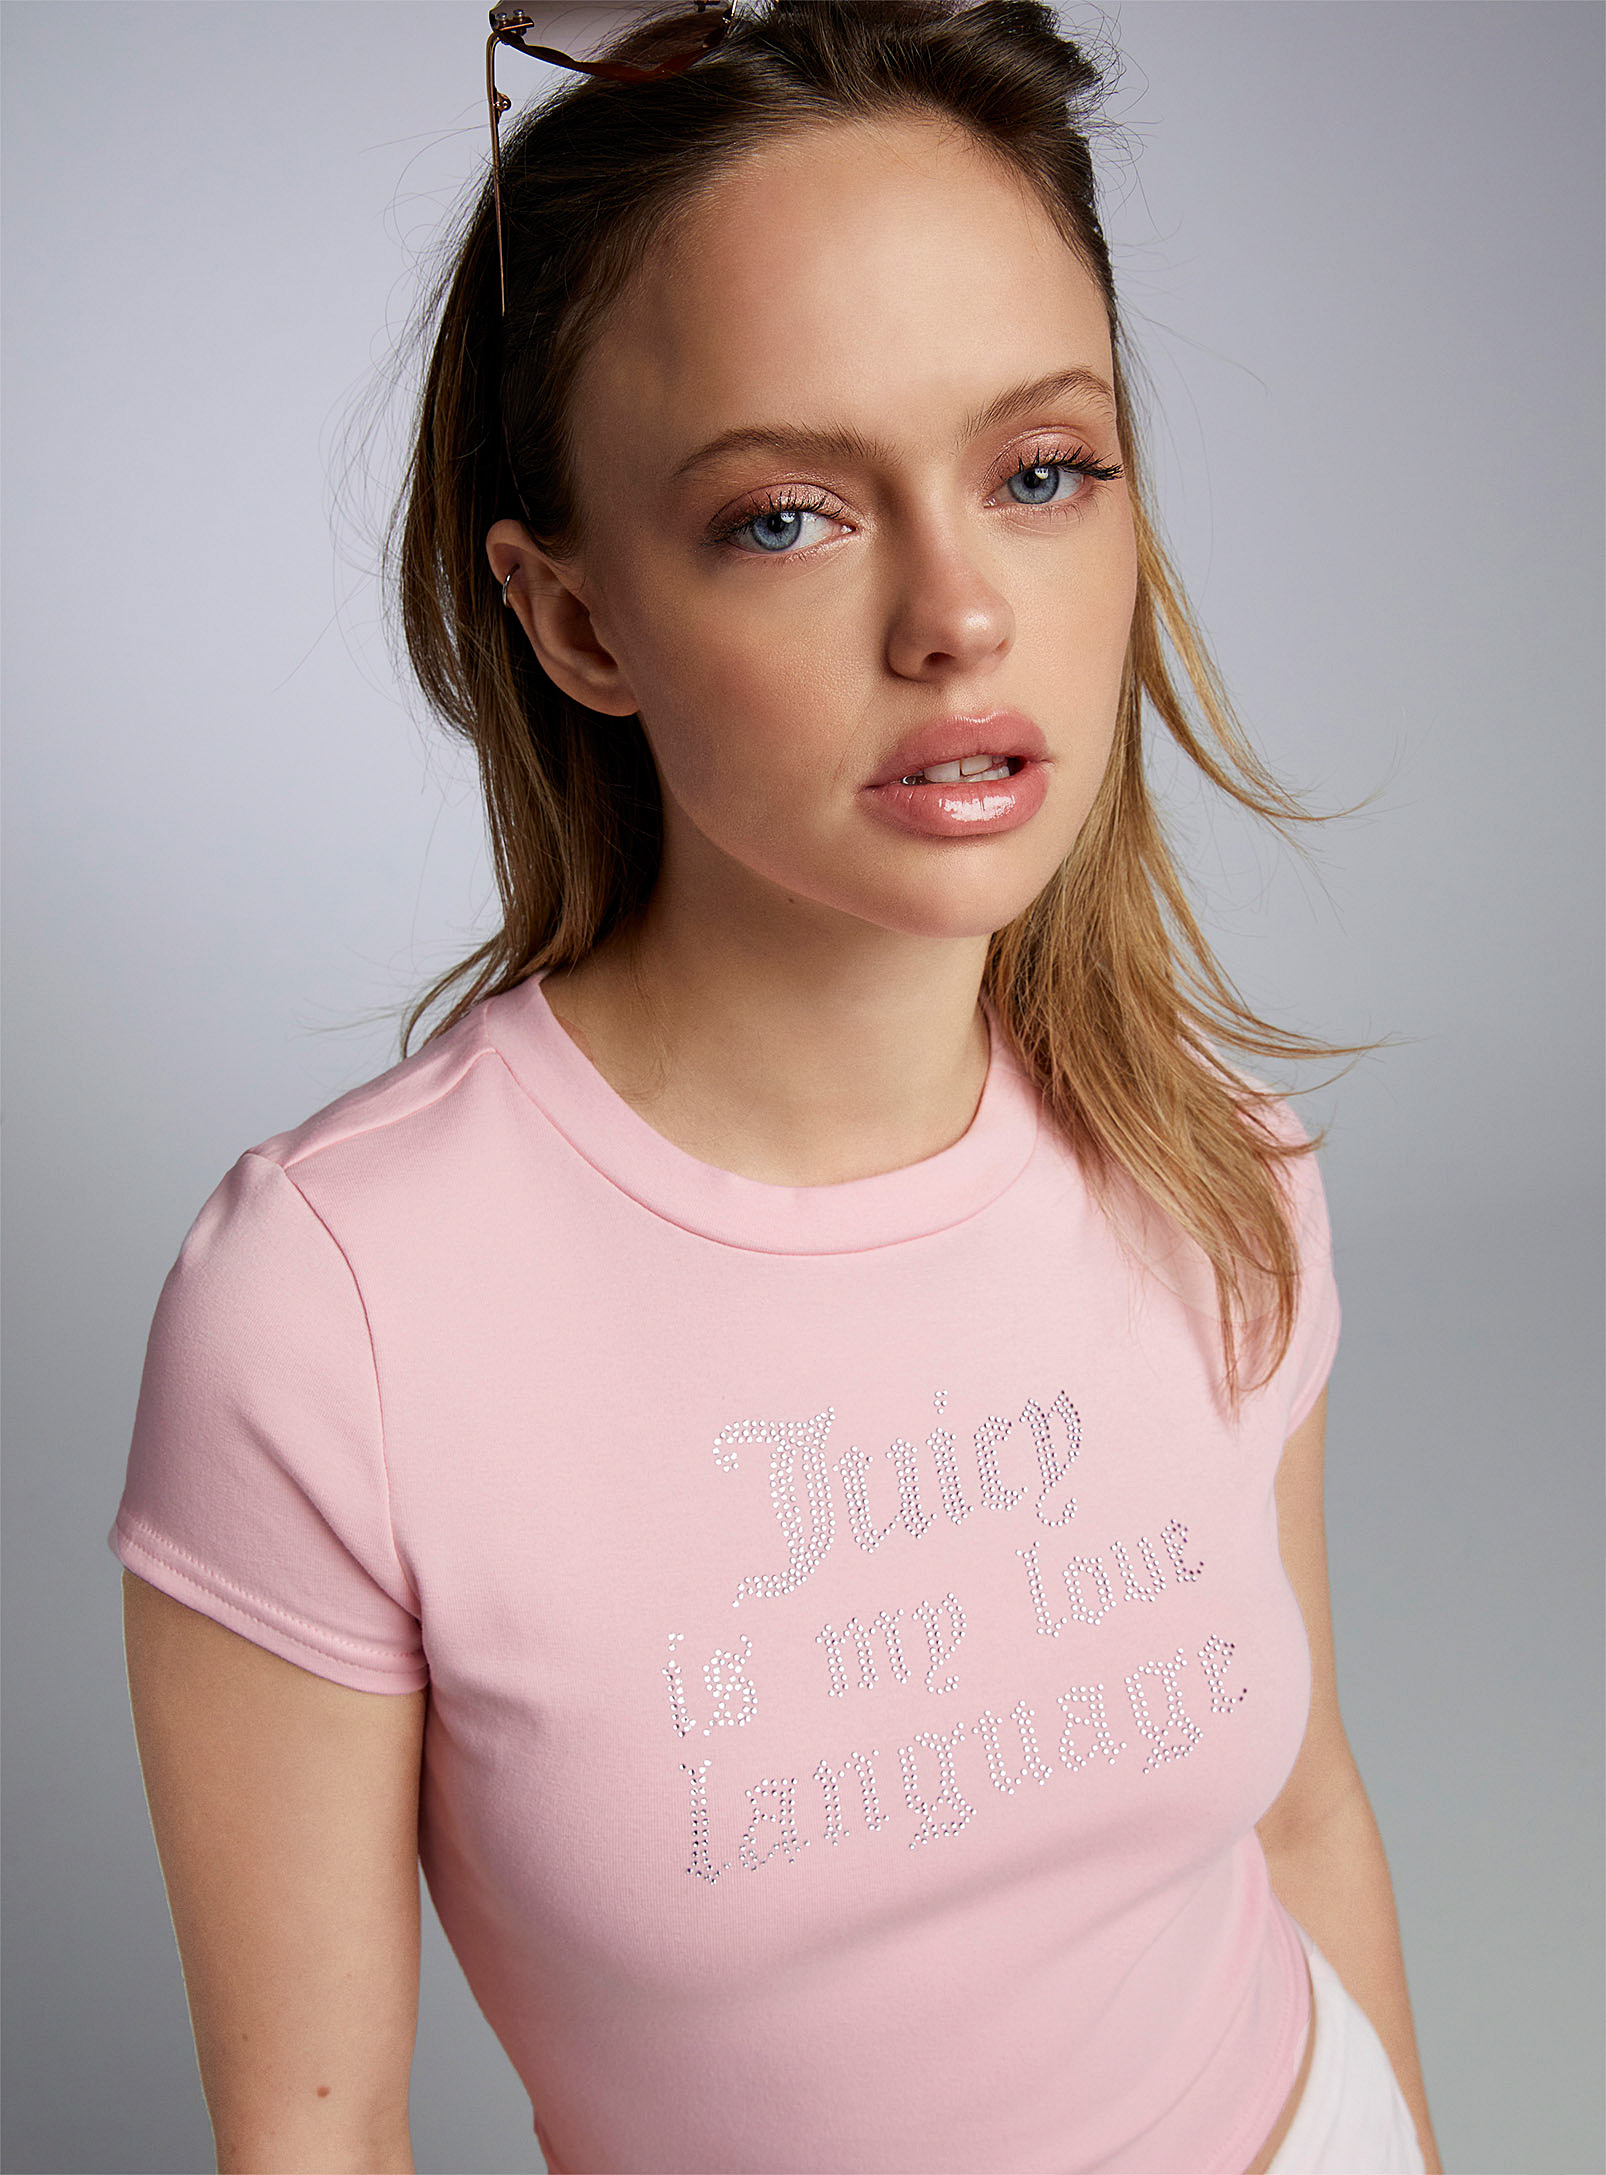 Juicy Couture - Women's Diamonds phrase pink T-shirt